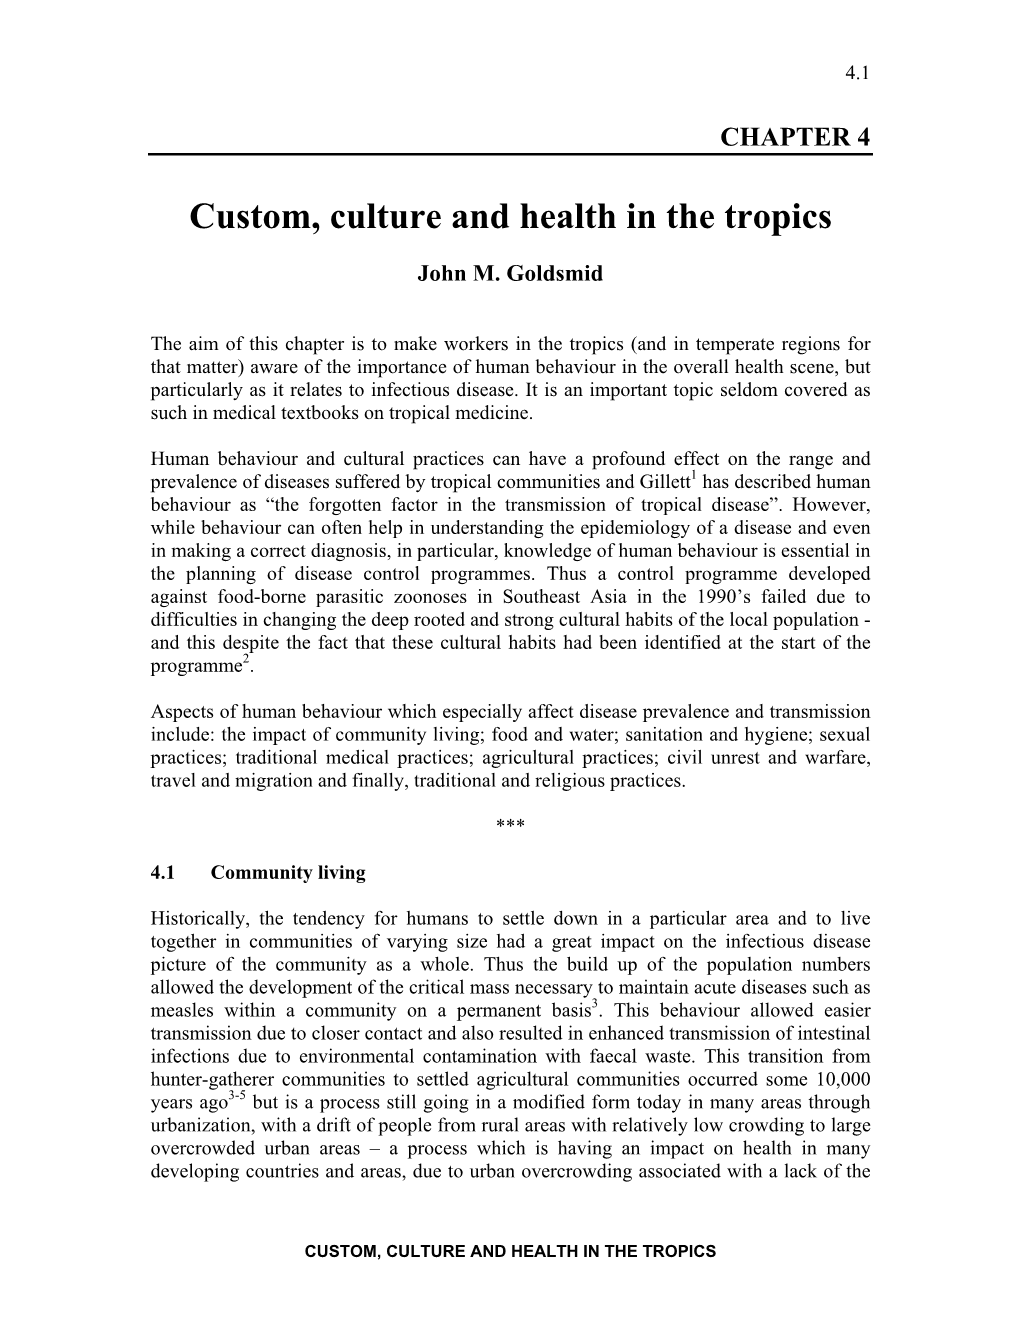 Custom, Culture and Health in the Tropics